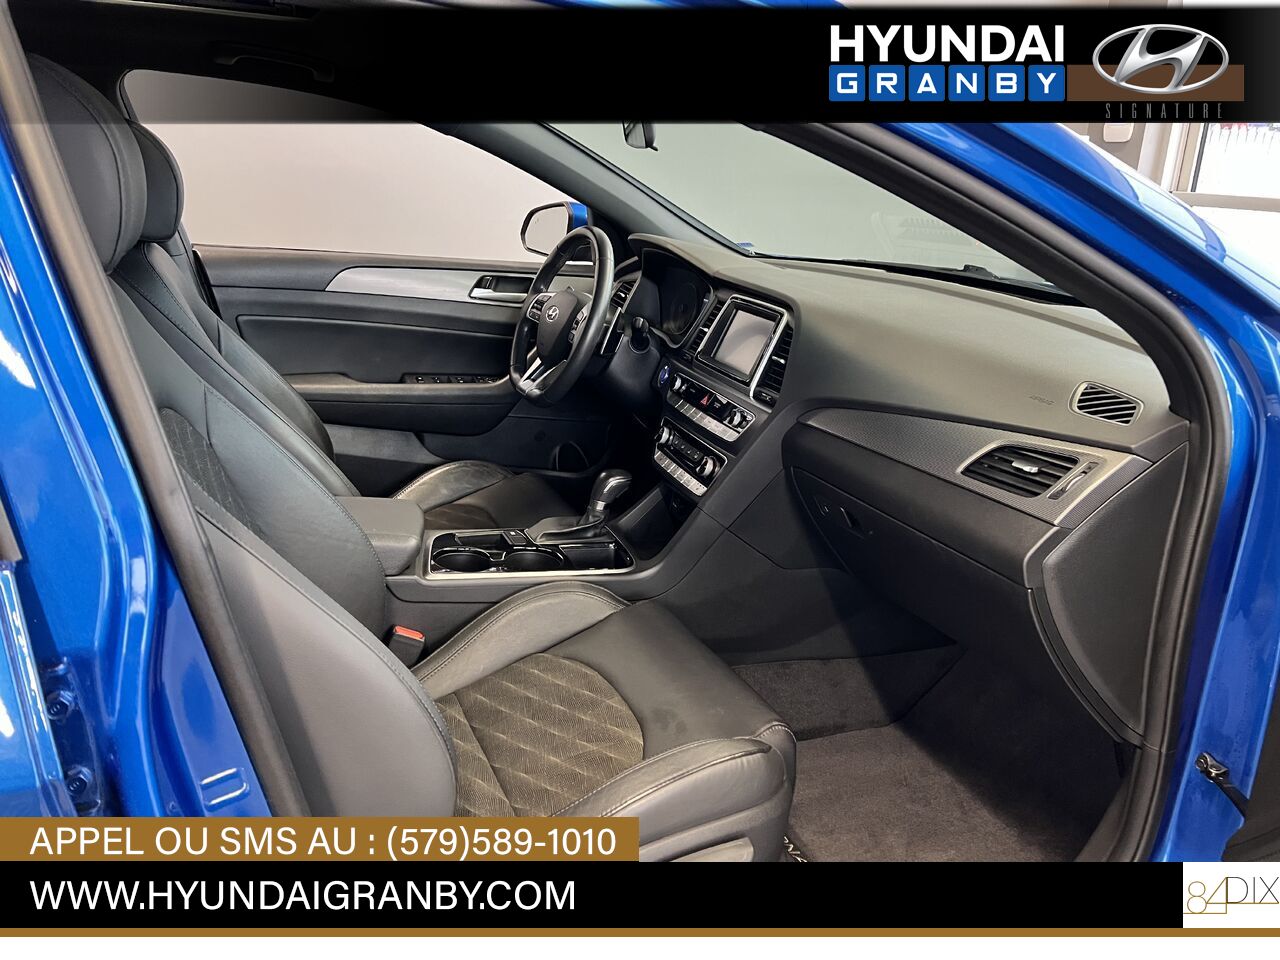 2018 Hyundai Sonata Granby - photo #26